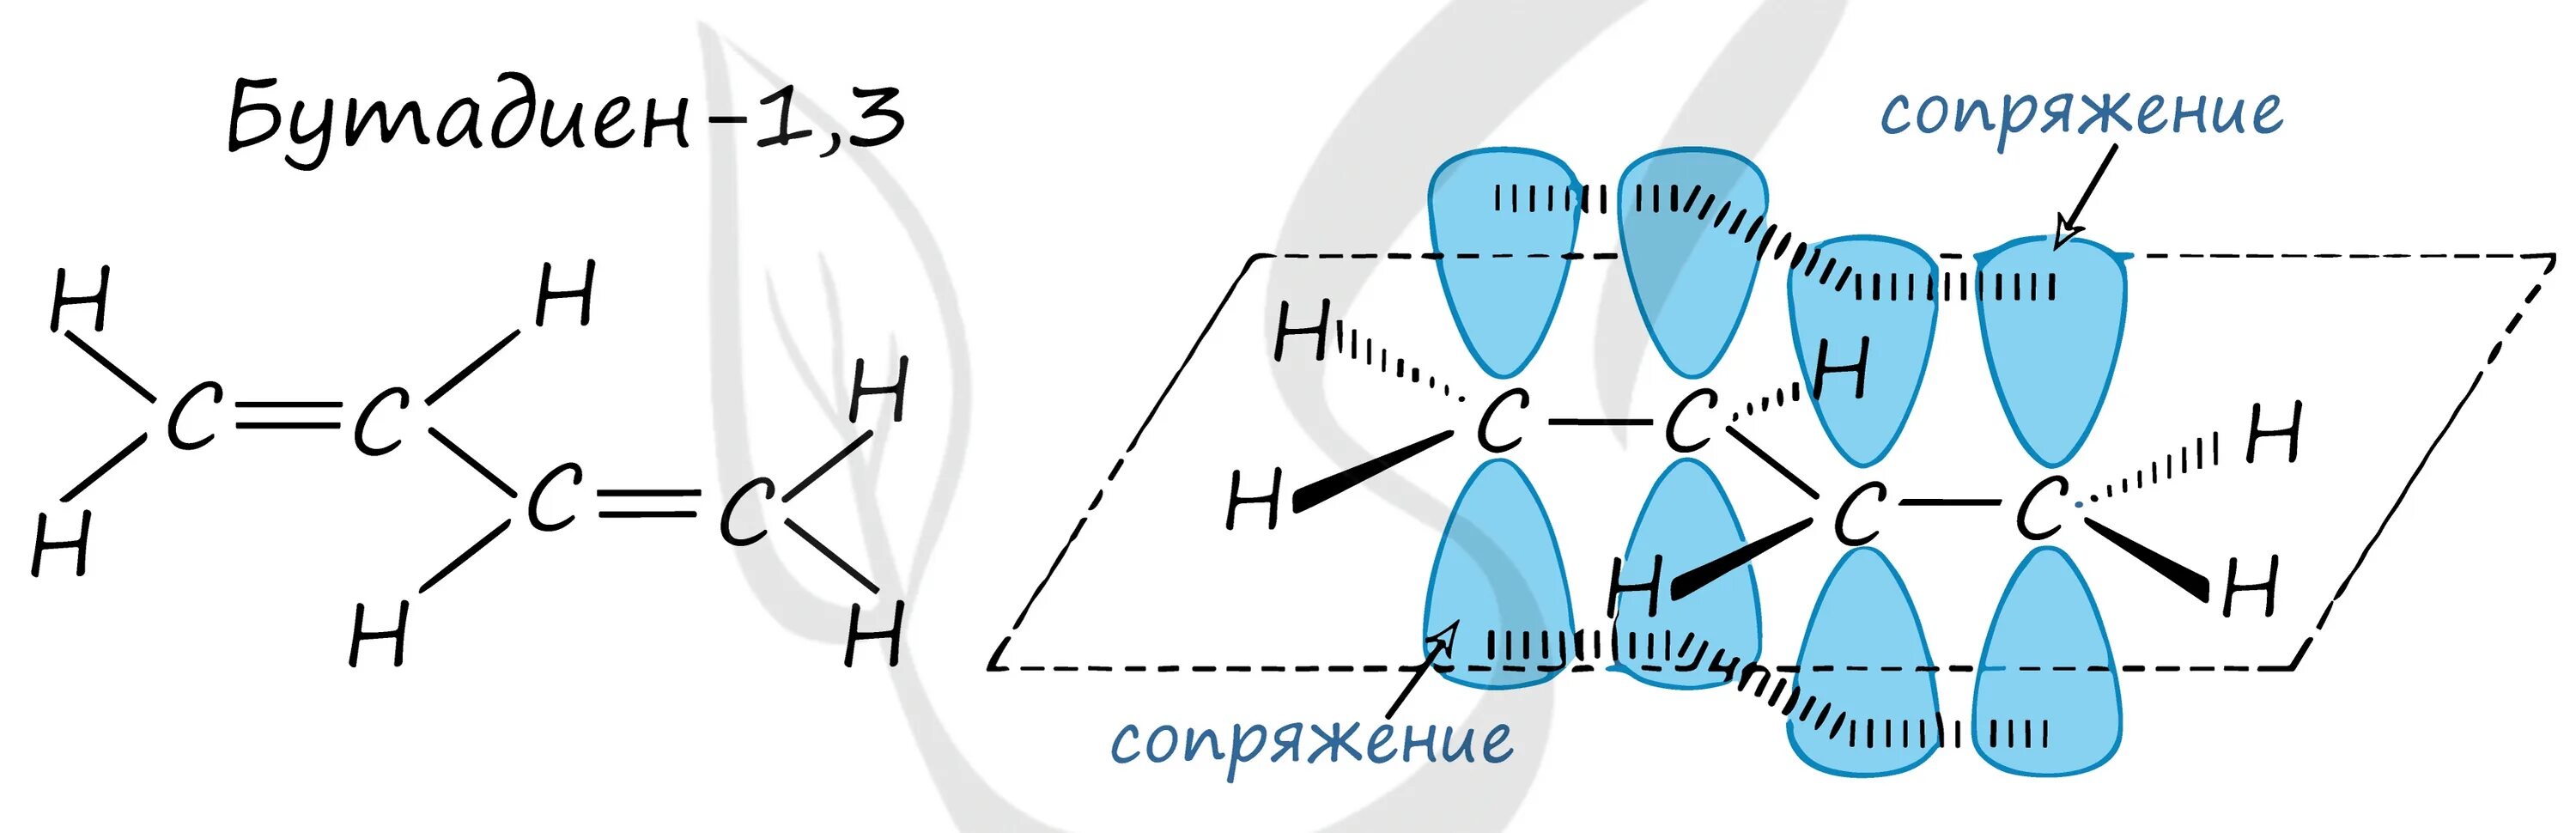 Гибридизация атомов в бутадиене 1 2. Строение молекулы бутадиена 1.3. Электронное строение молекулы бутадиена-1.3. Бутадиен строение молекулы. Схема бутадиена 1.3.